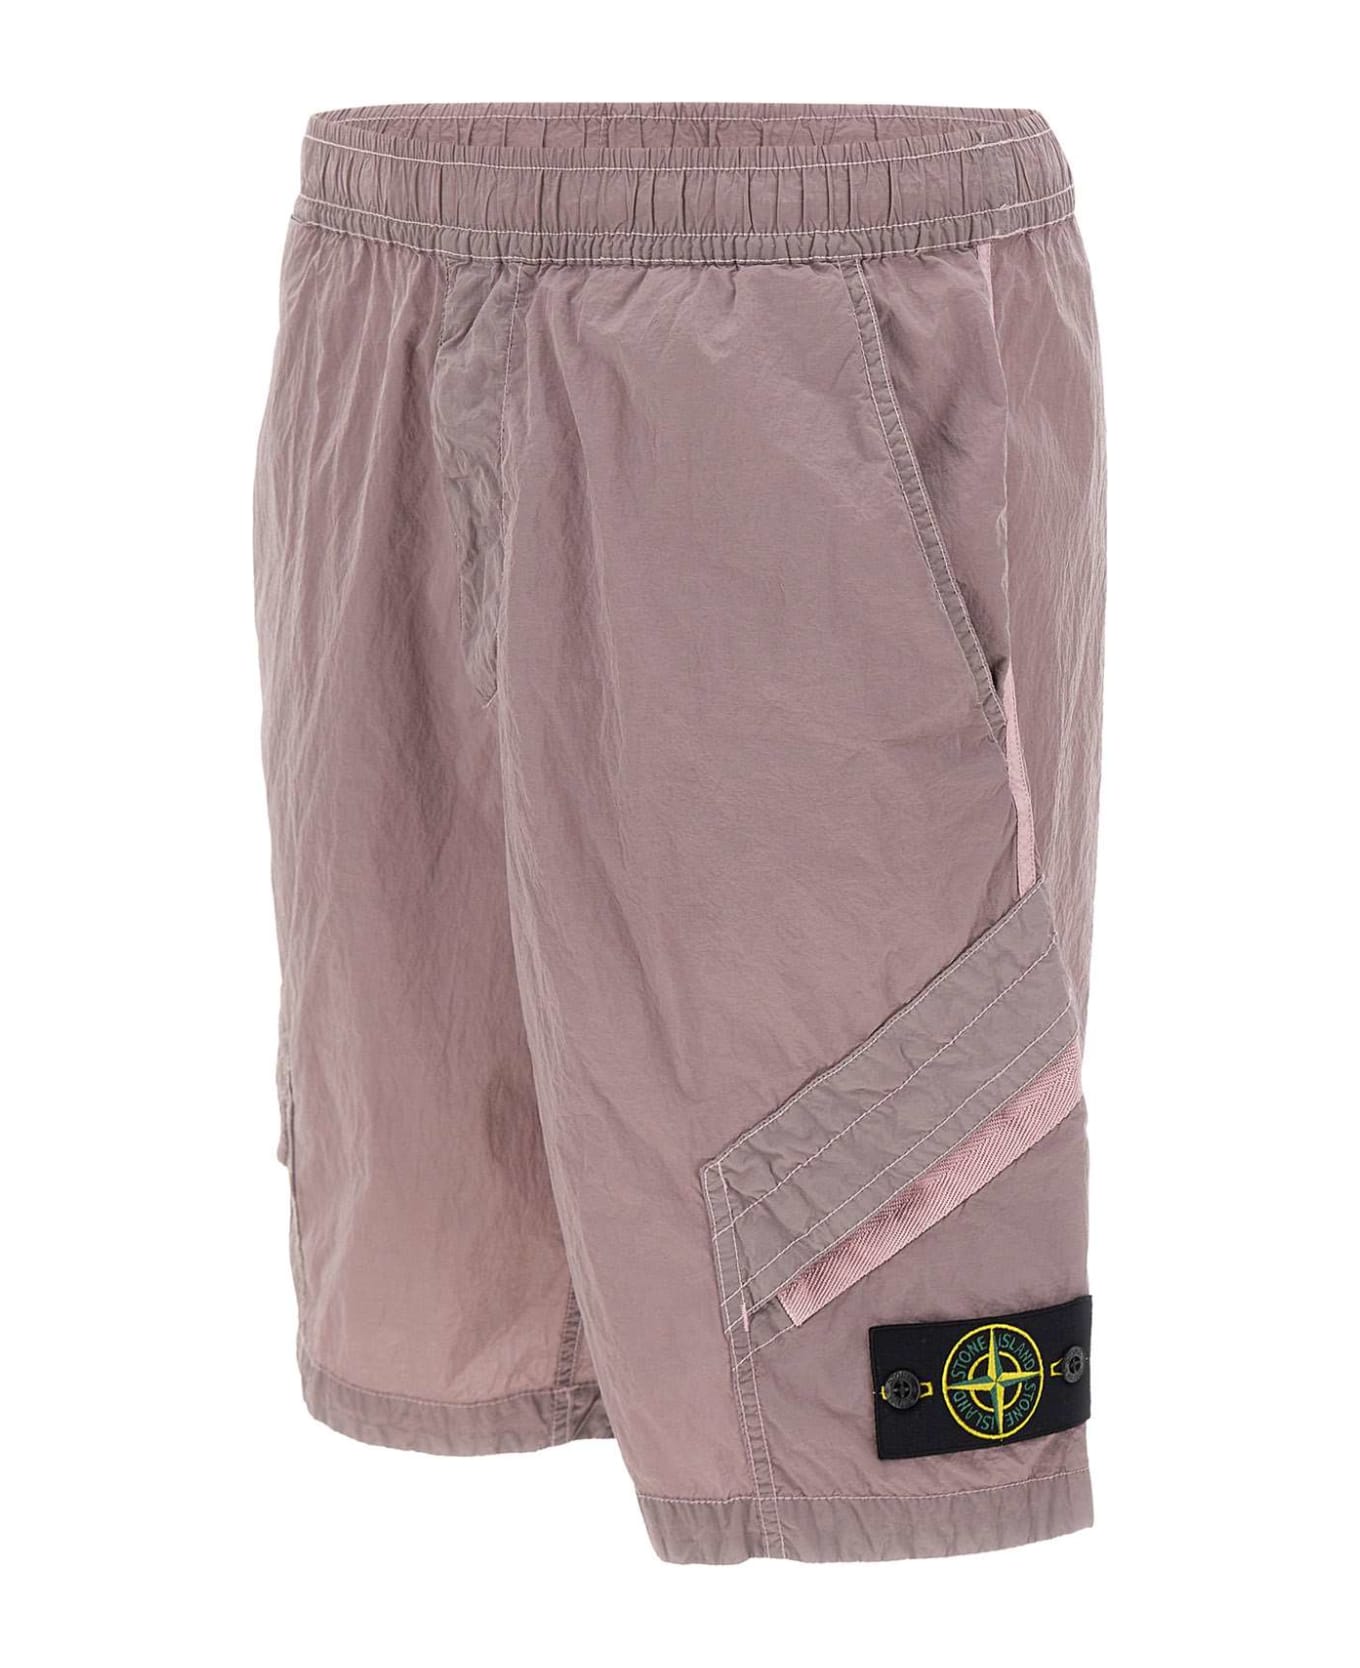 Stone Island Nylon Shorts - PINK